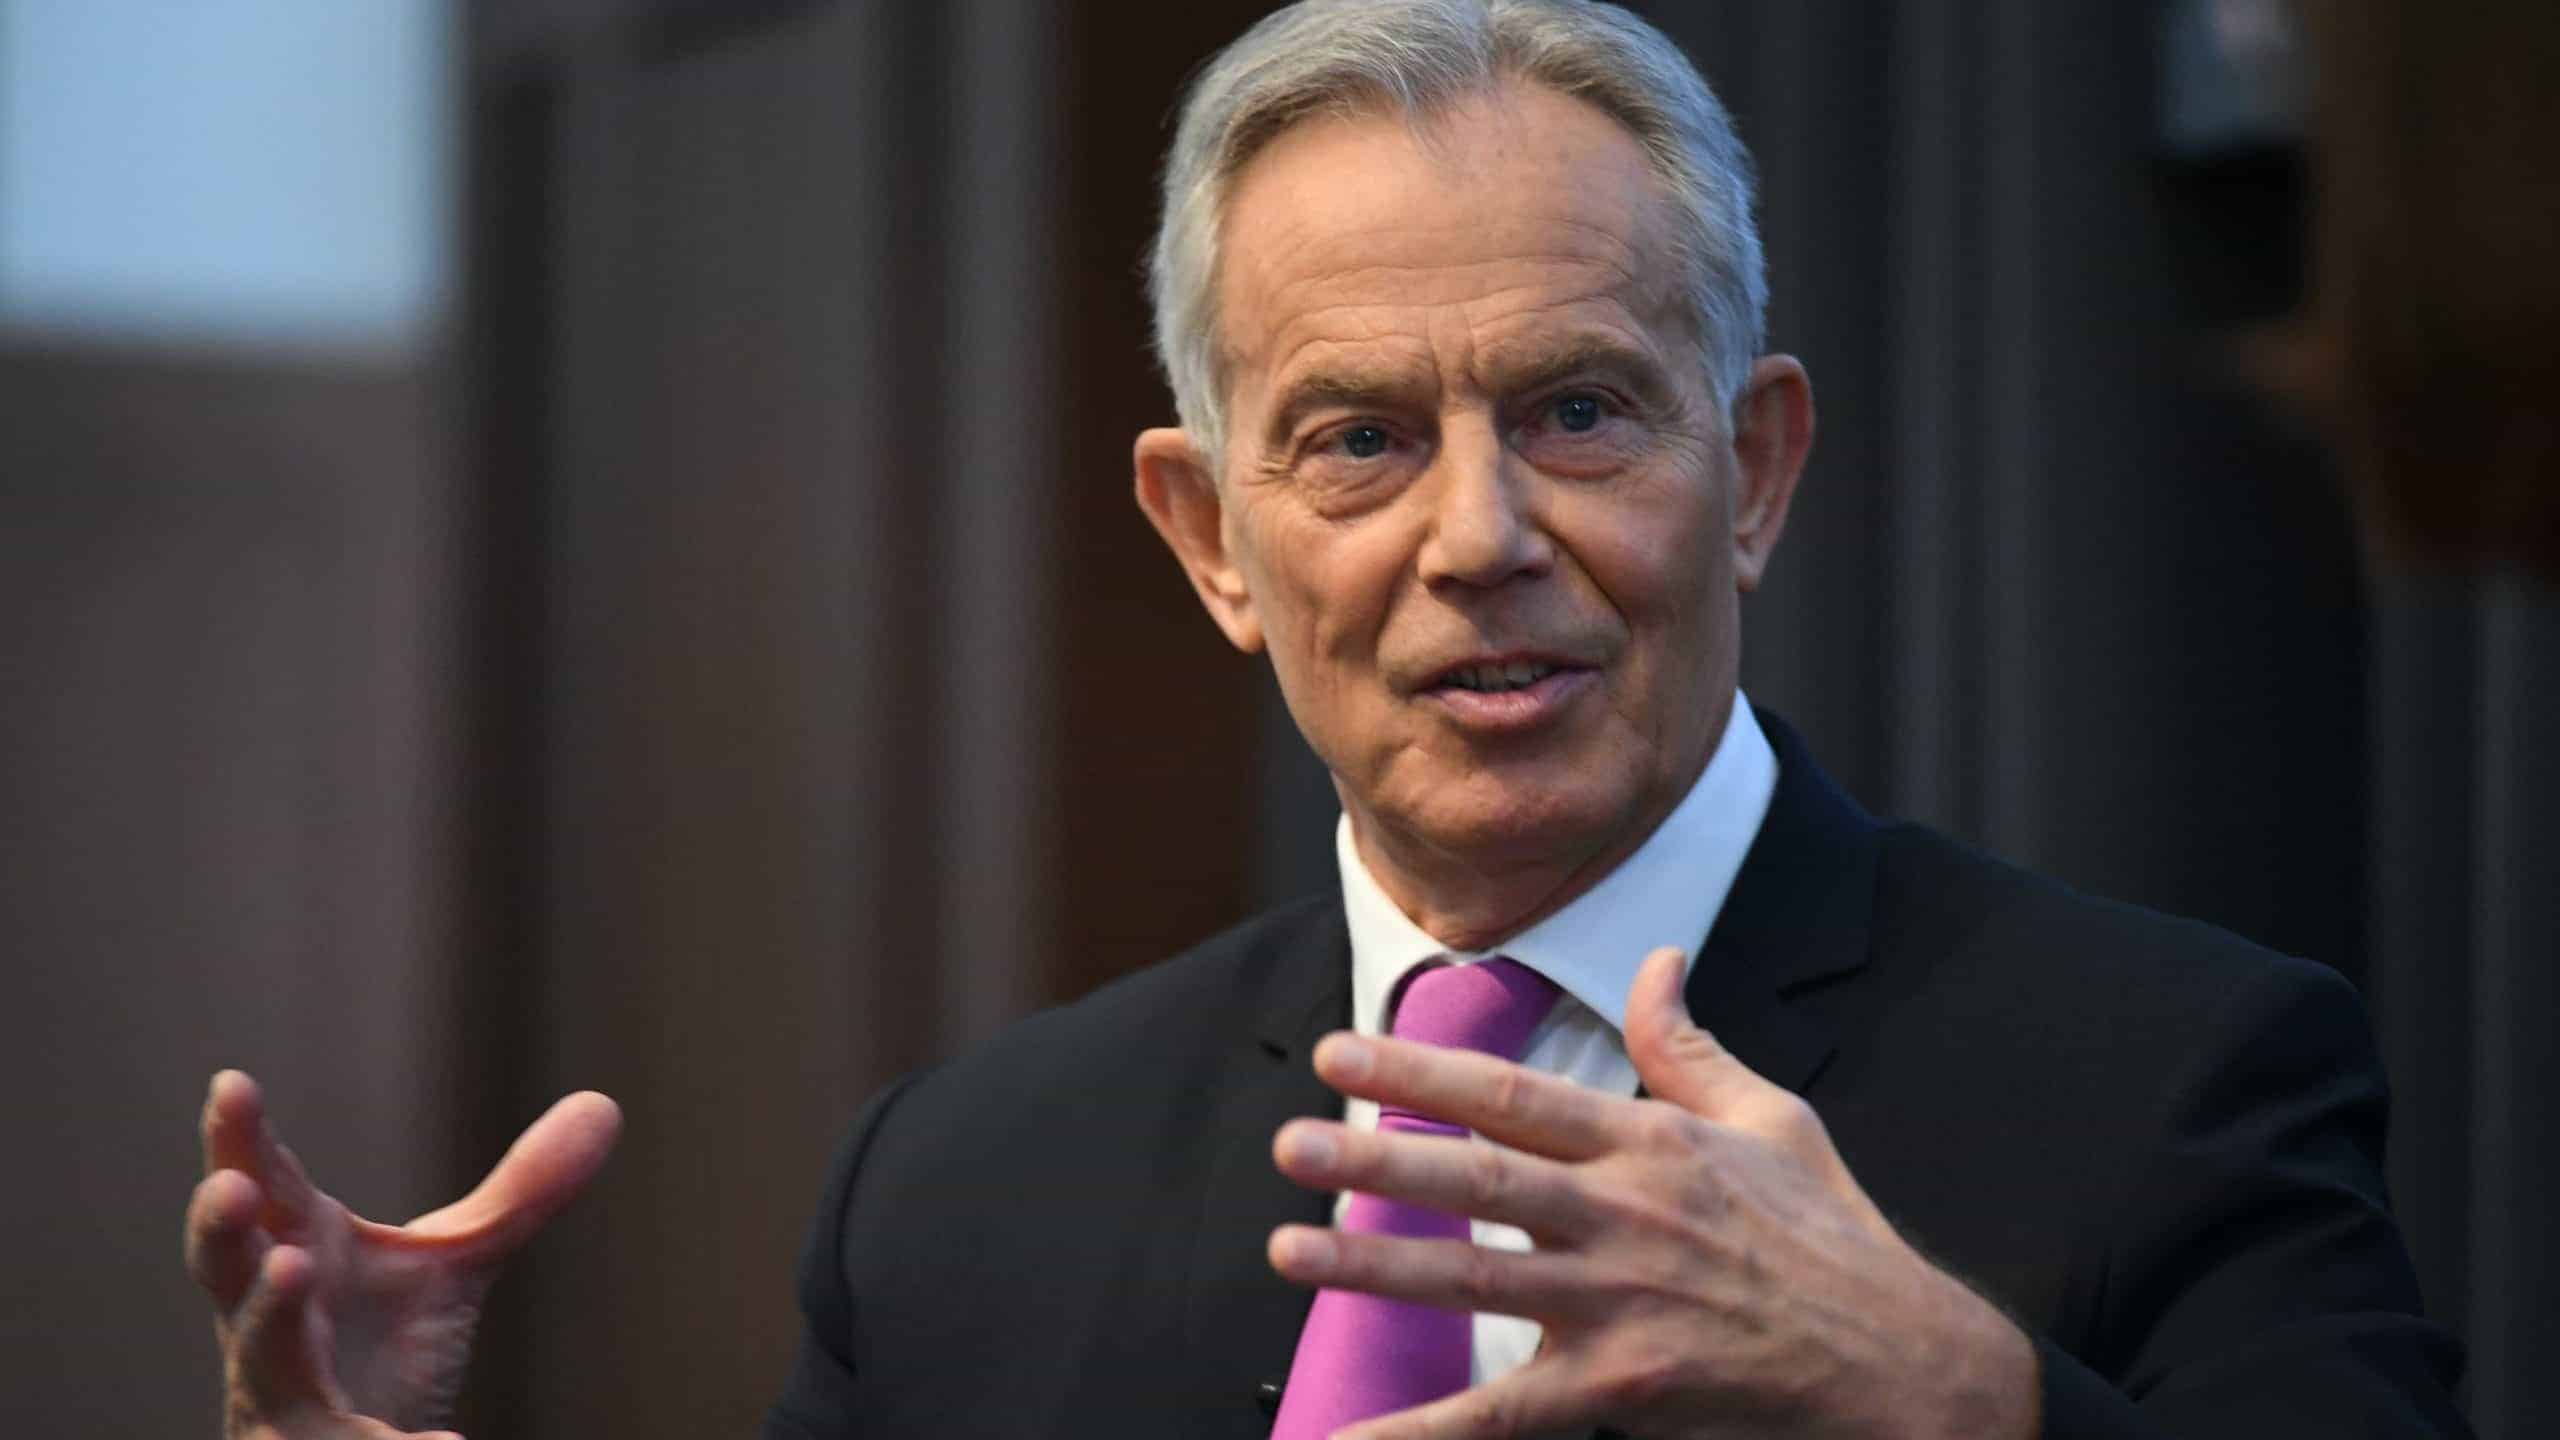 Tony Blair backs Government bid to reopen schools